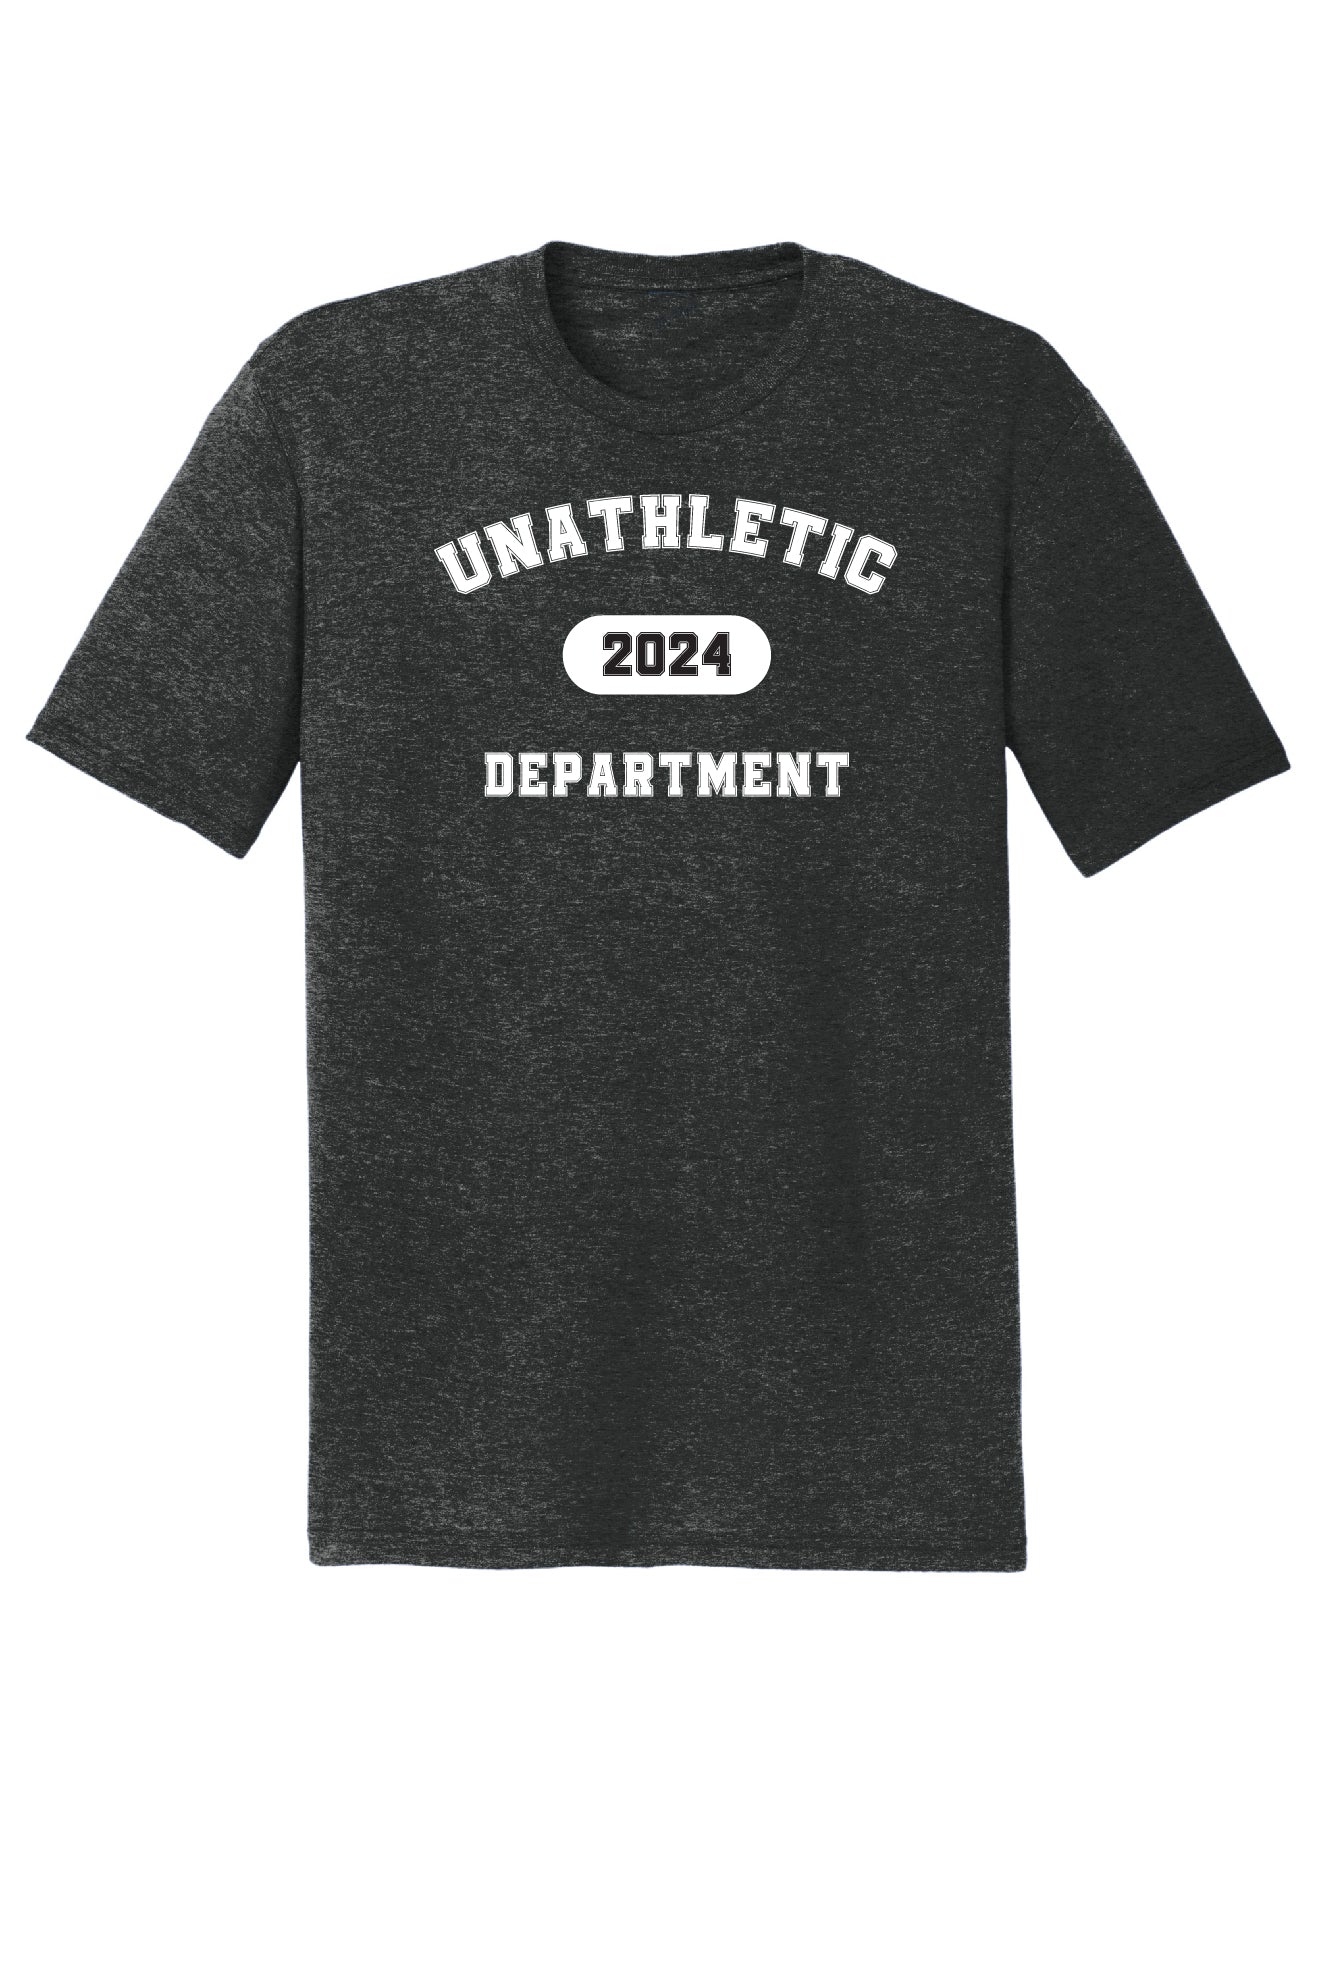 Unathletic Department 2024 Tee